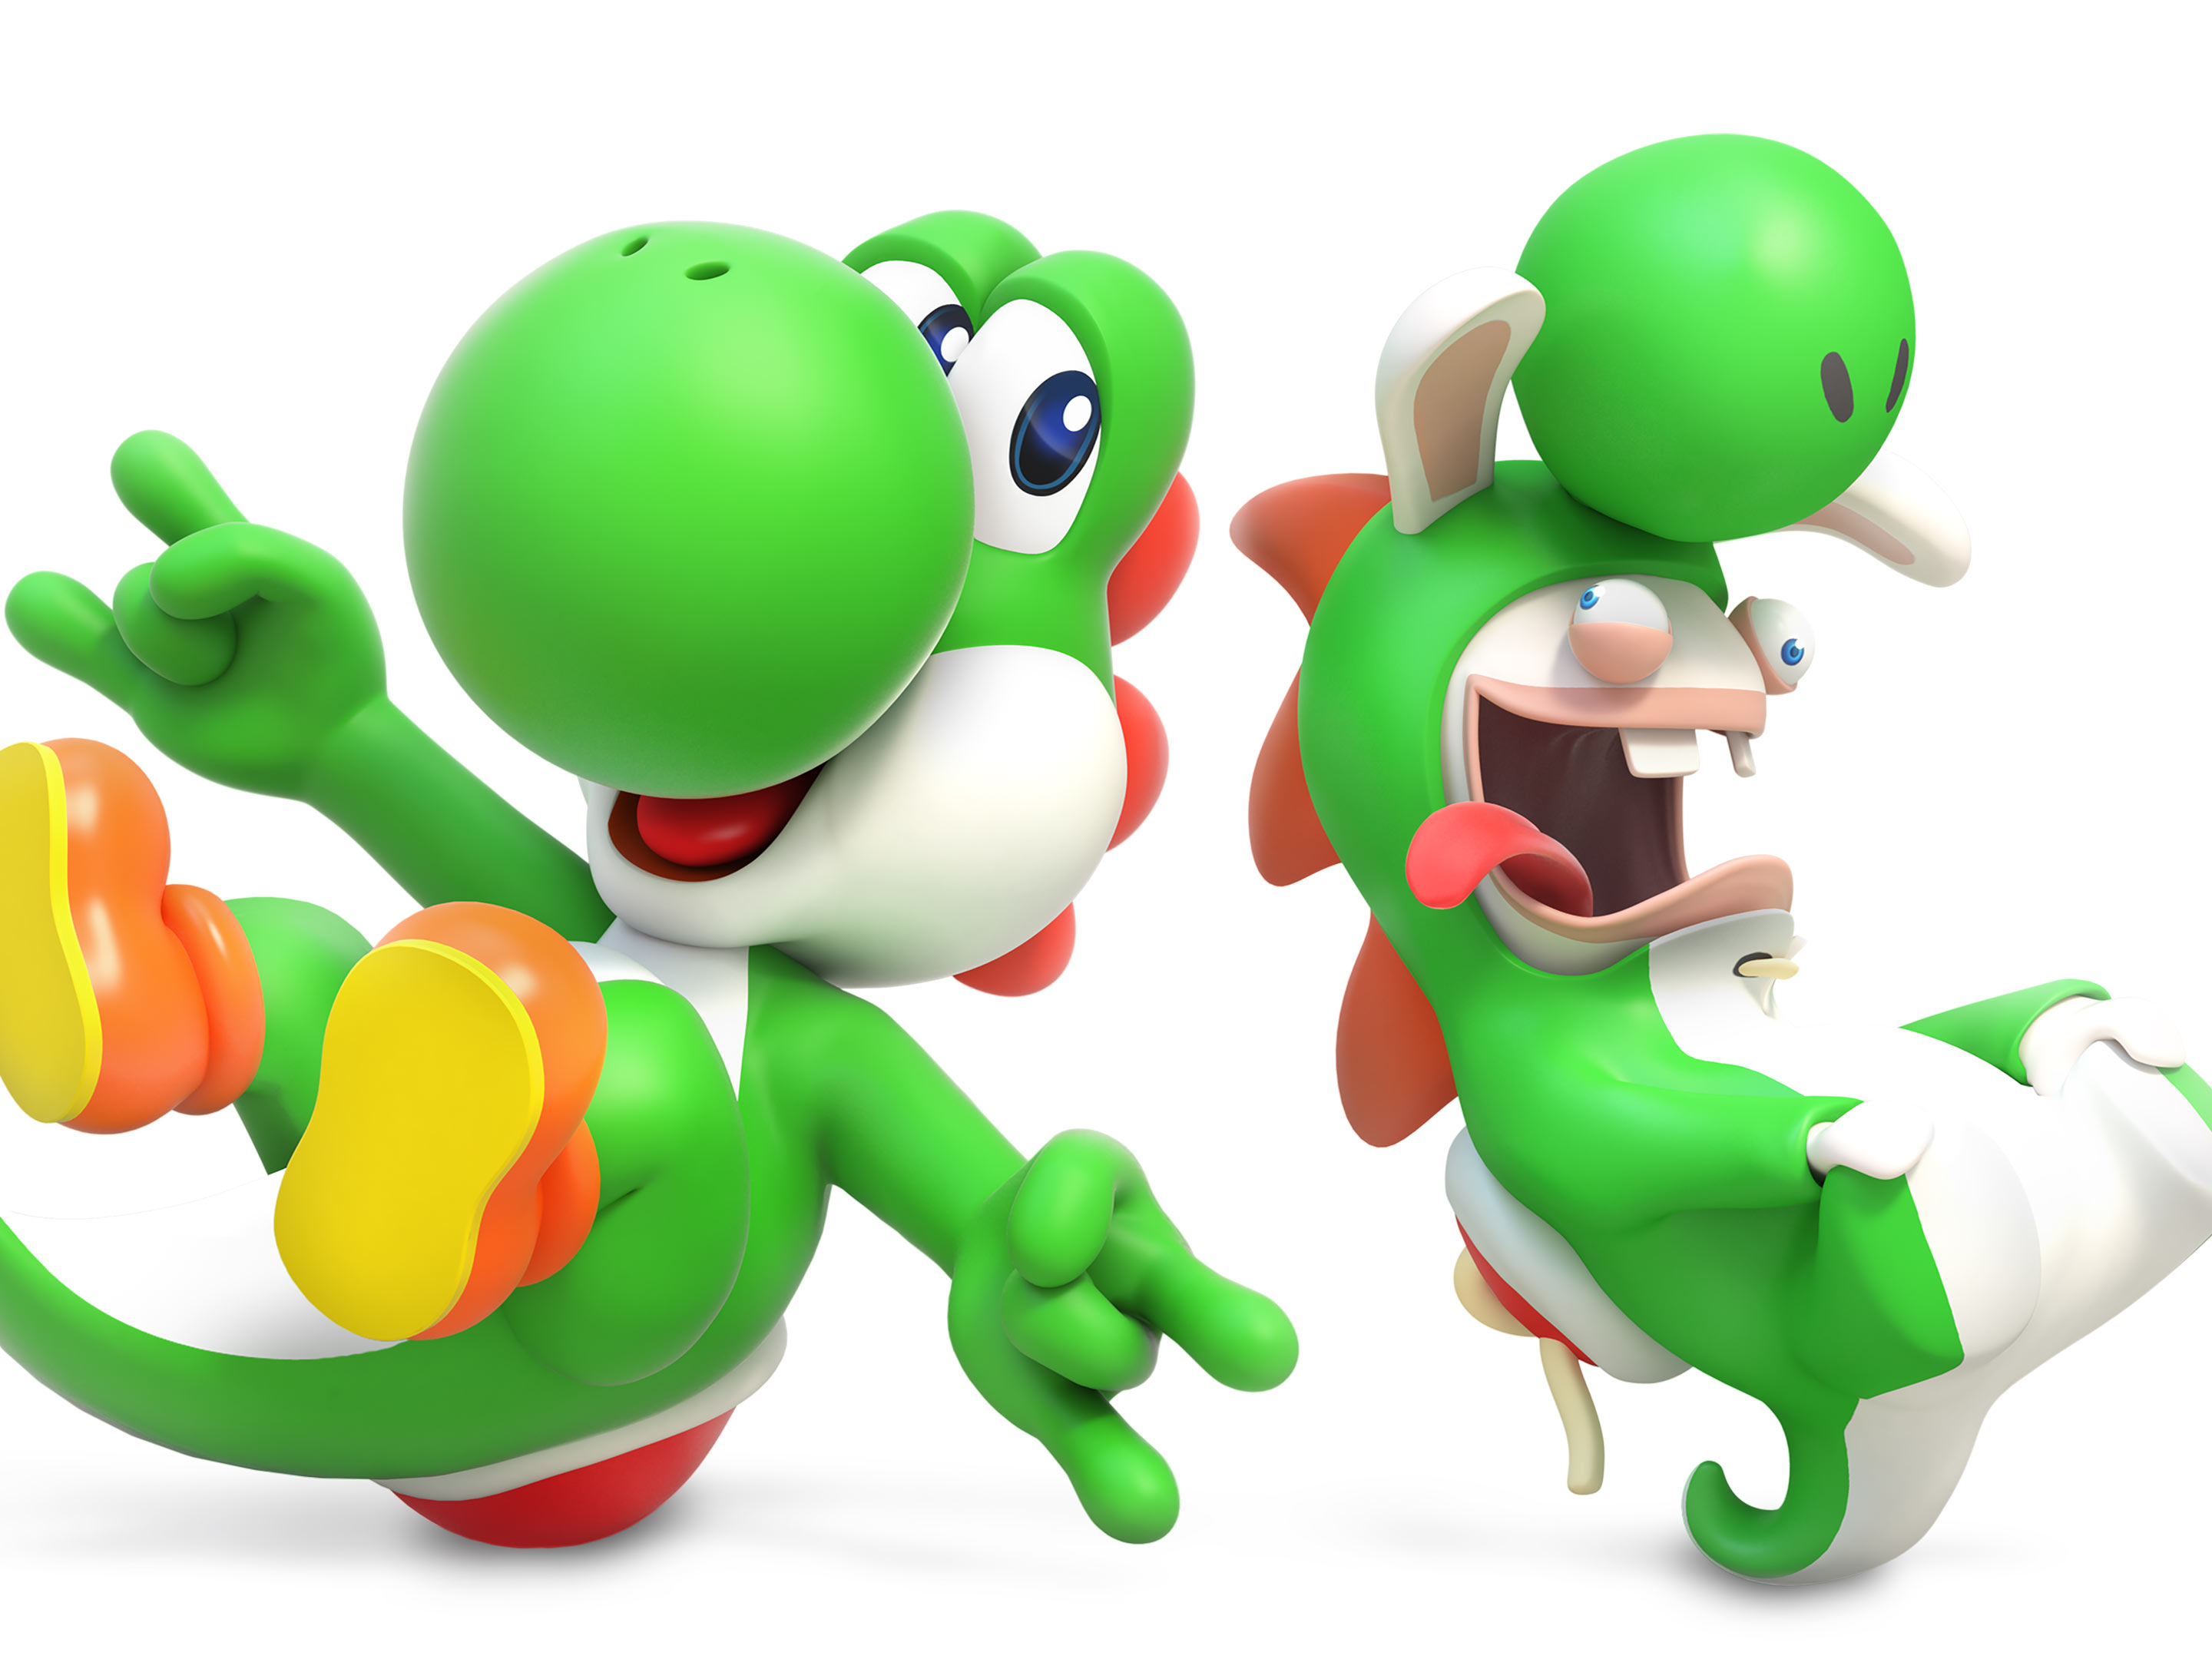 Mario + Rabbids render Yoshi